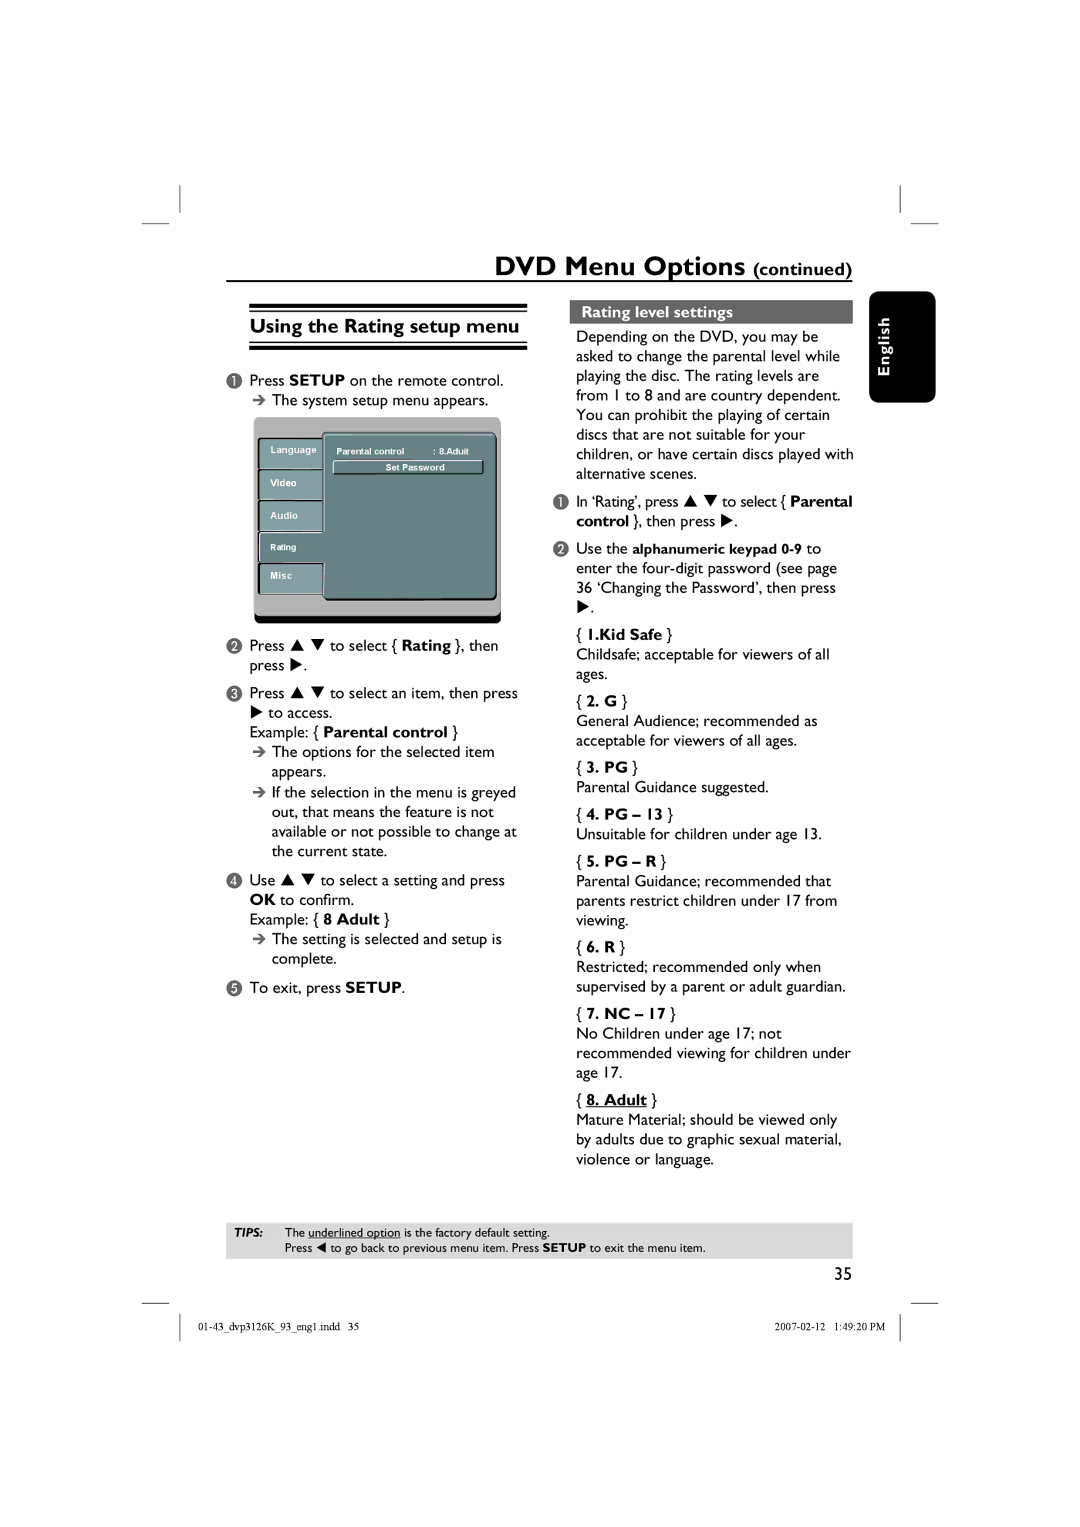 Philips DVP3126K/93 user manual Using the Rating setup menu, Rating level settings, Kid Safe, Pg R, Adult 